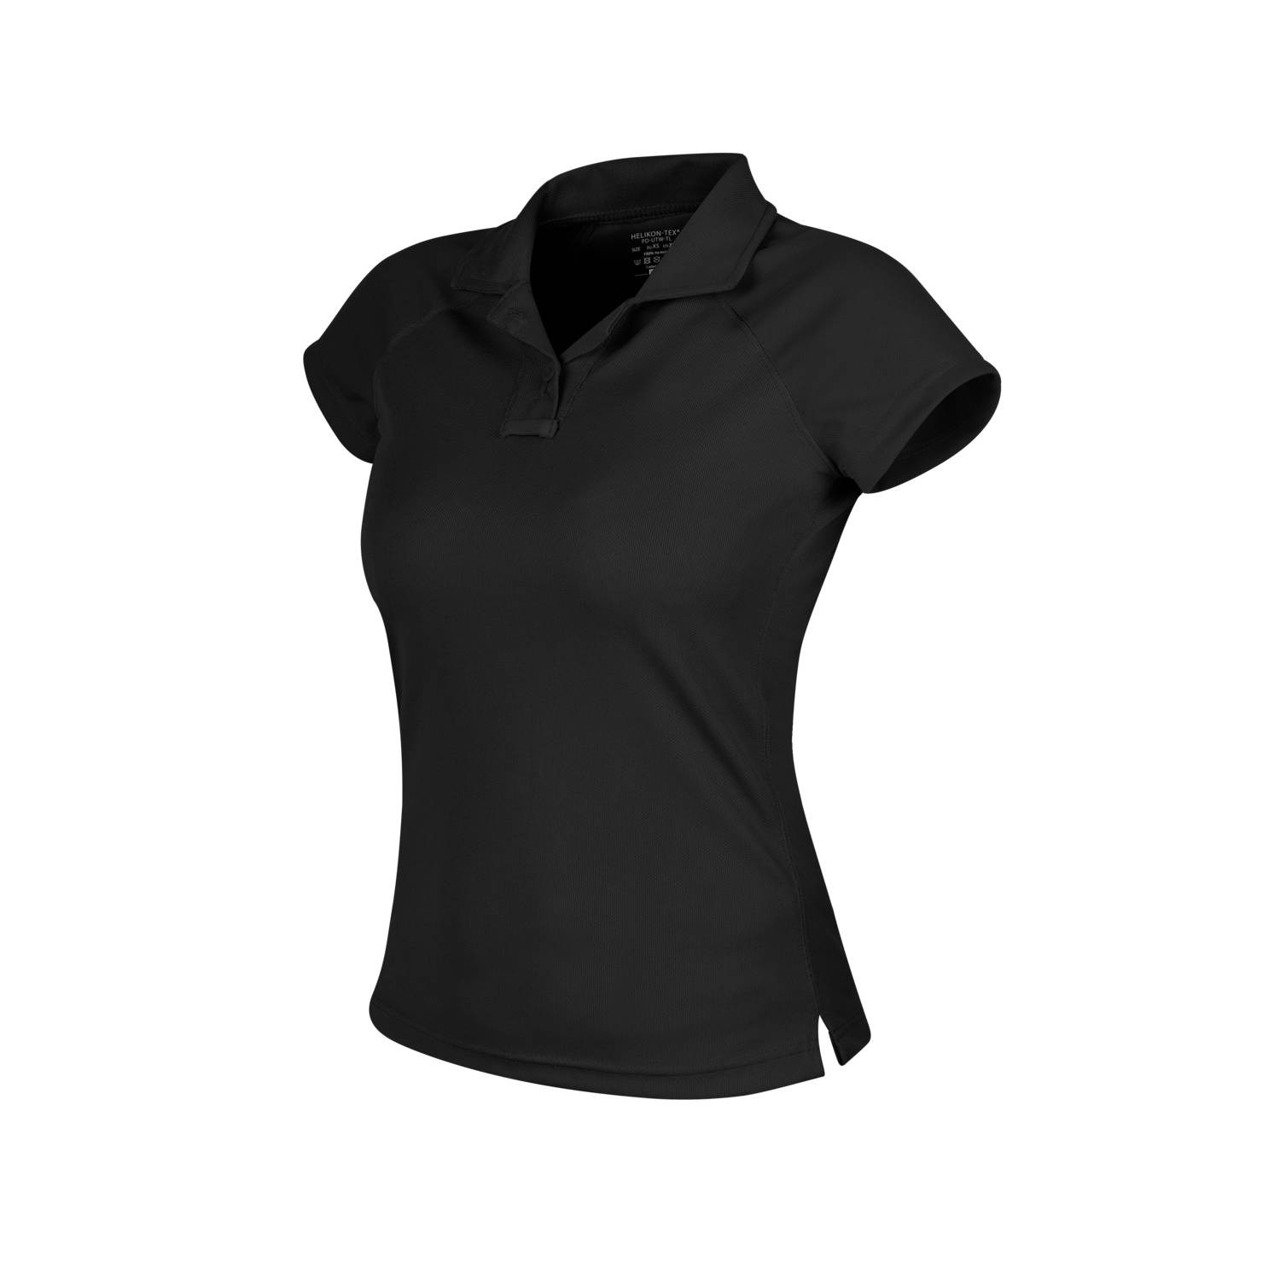 black polo t shirt women's